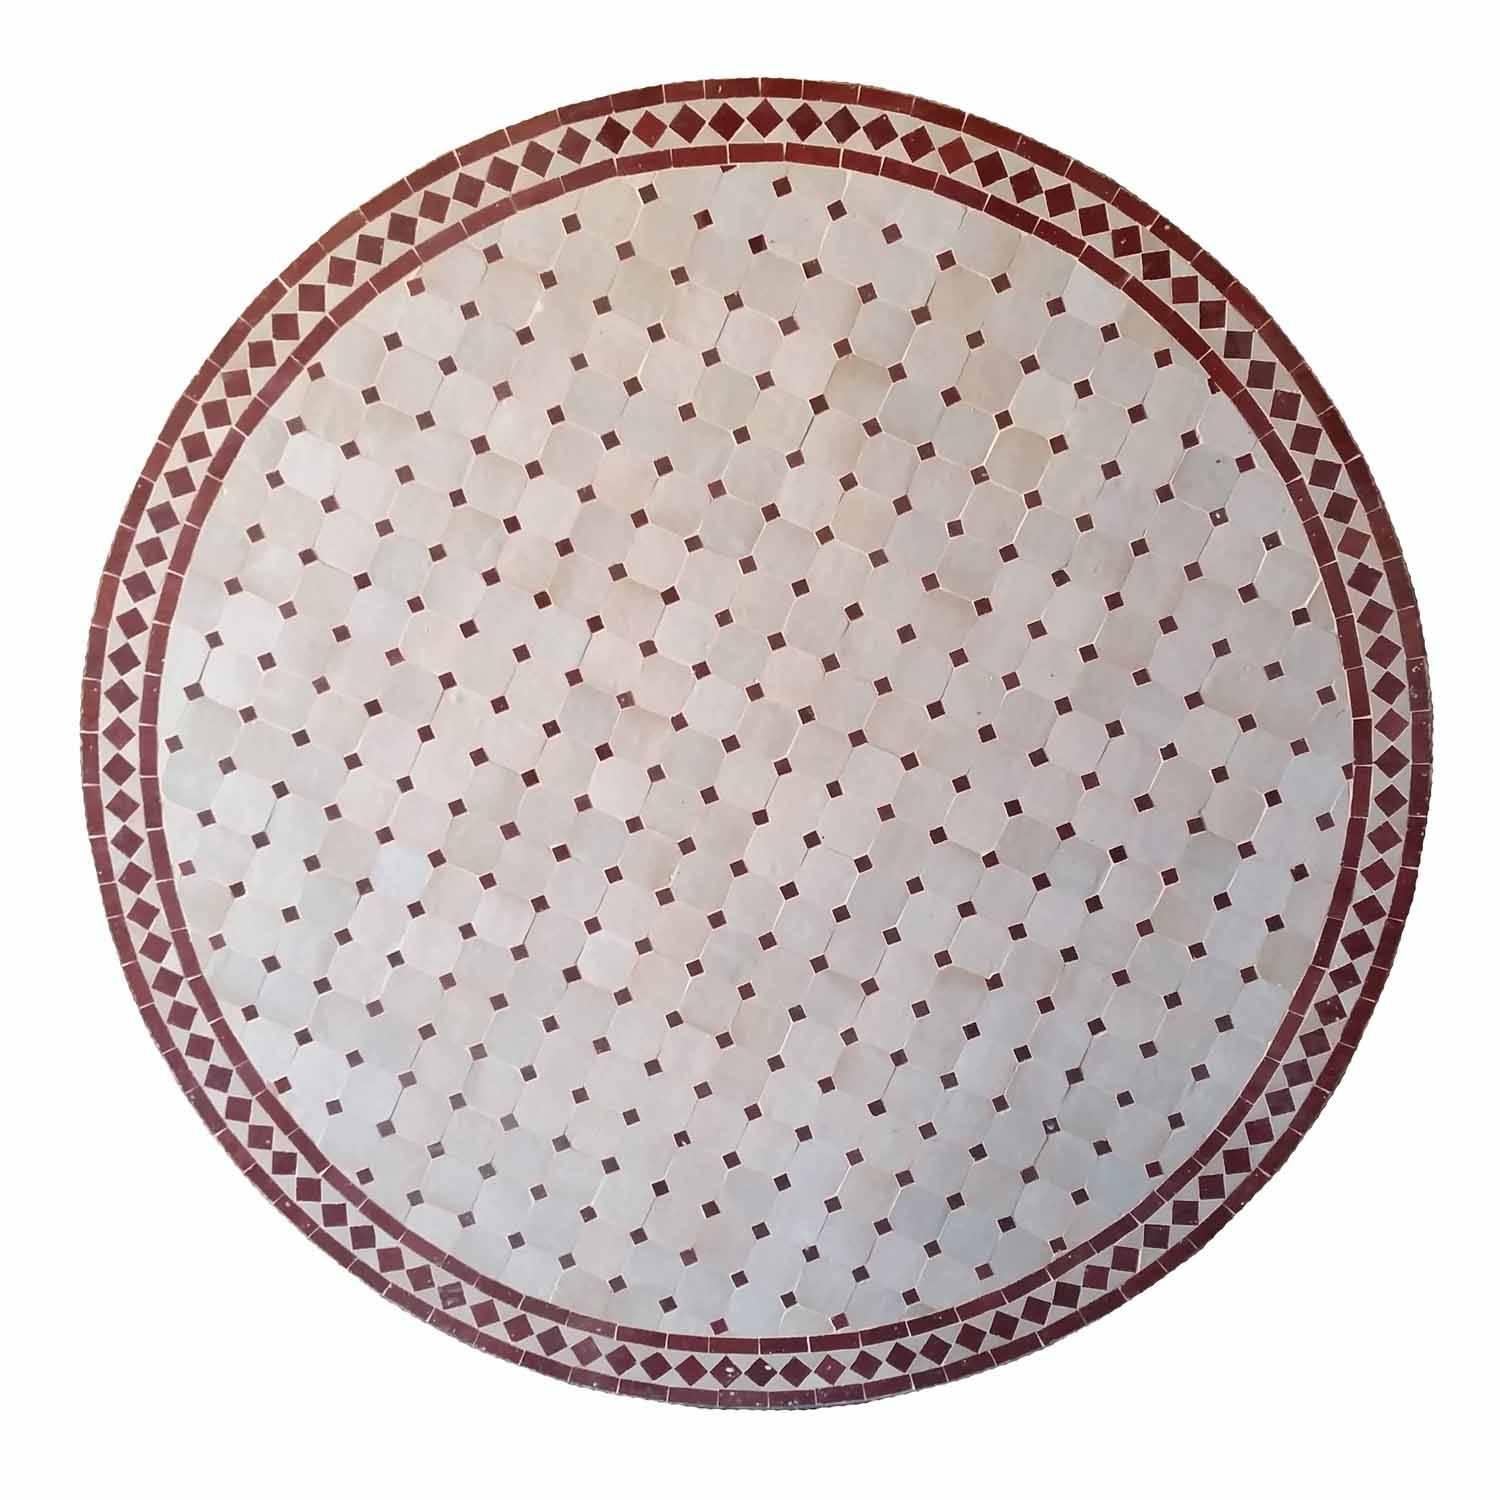 Custom-made glazed Moroccan mosaic table measuring 48